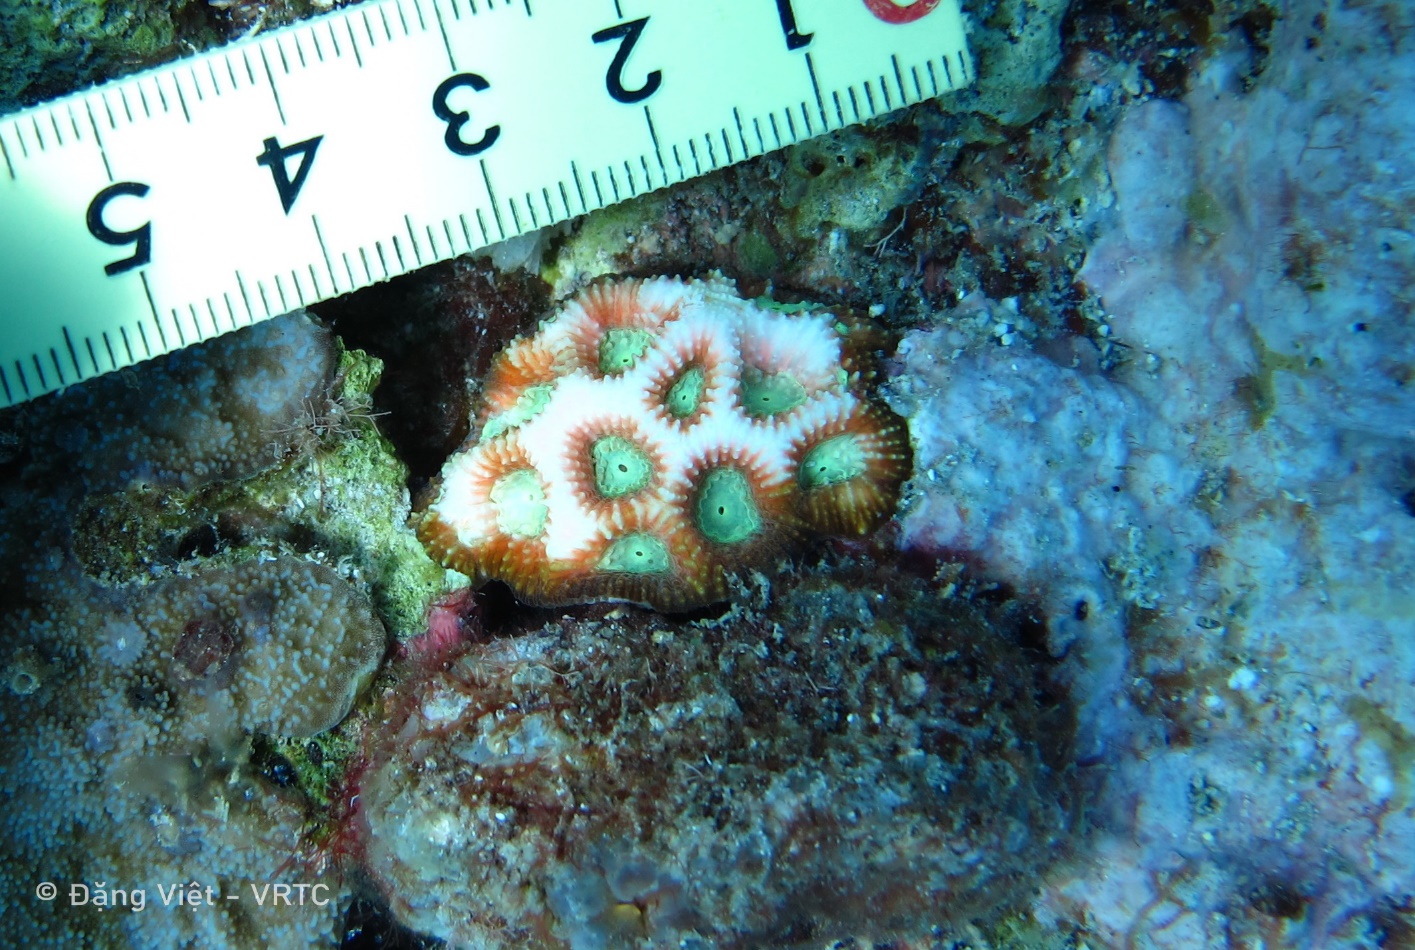 Description: A picture containing reef, organism, invertebrate, underwaterDescription automatically generated